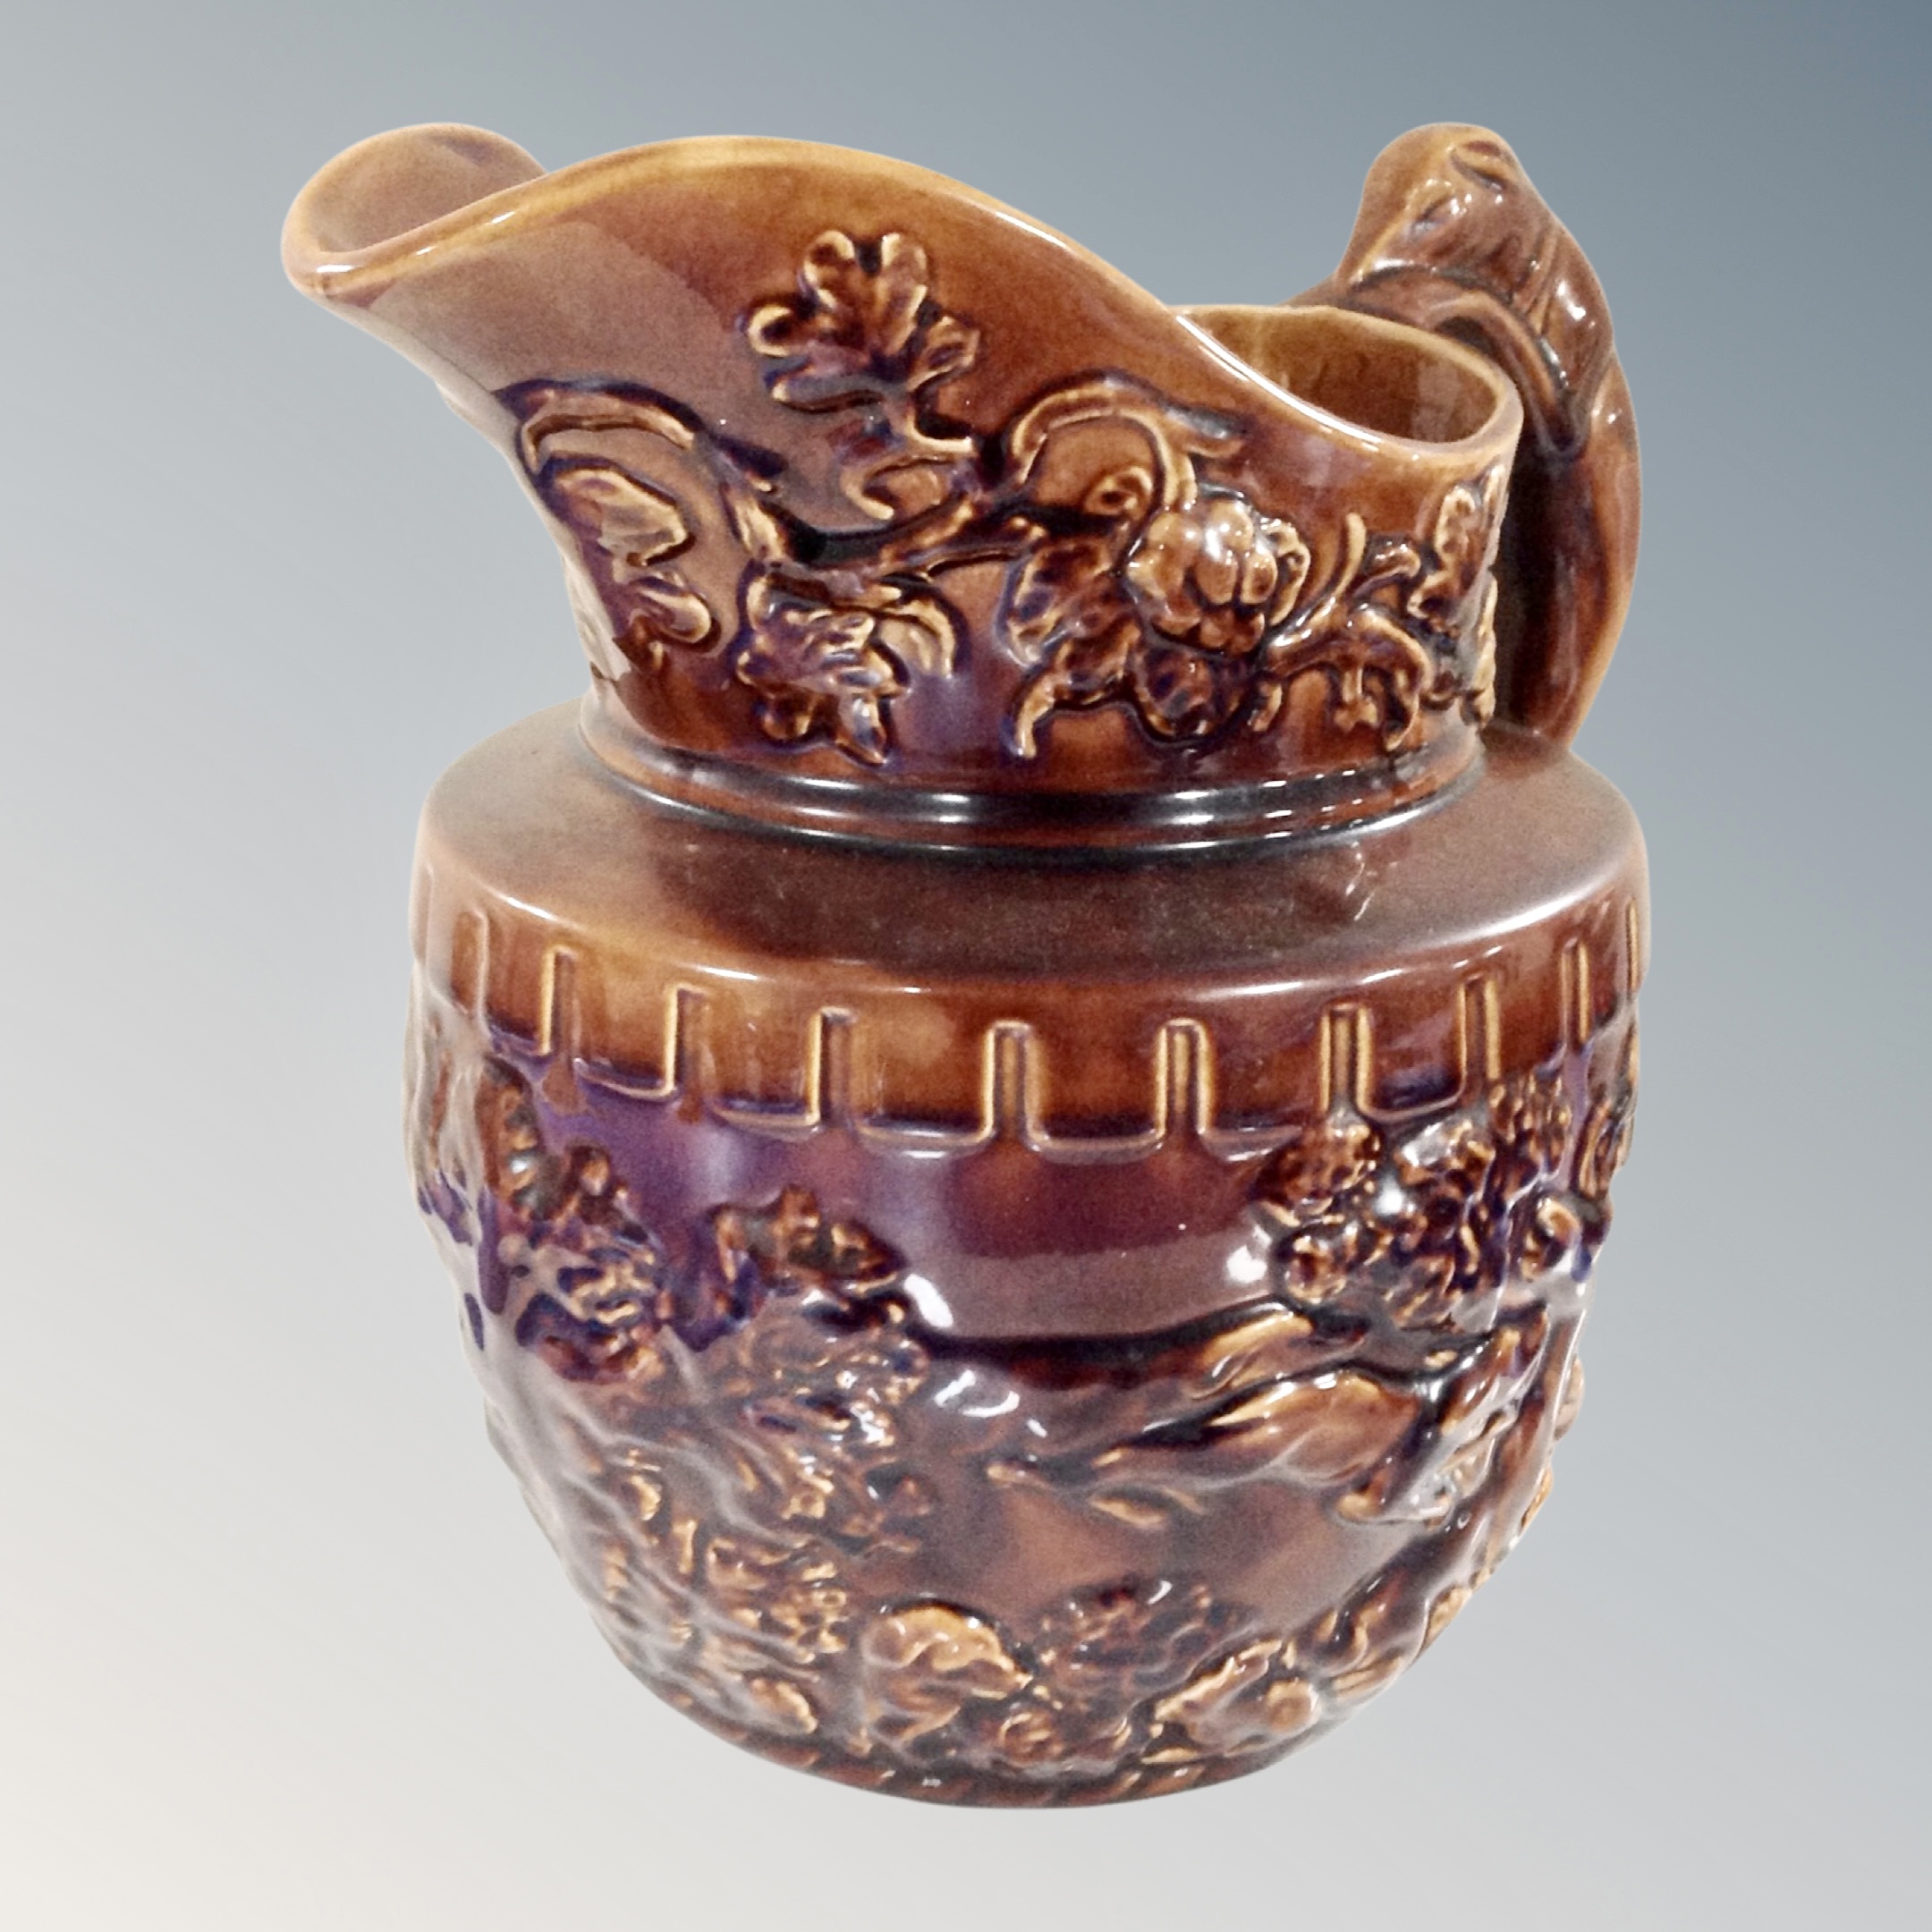 A vintage wood hound handle pottery embossed jug.